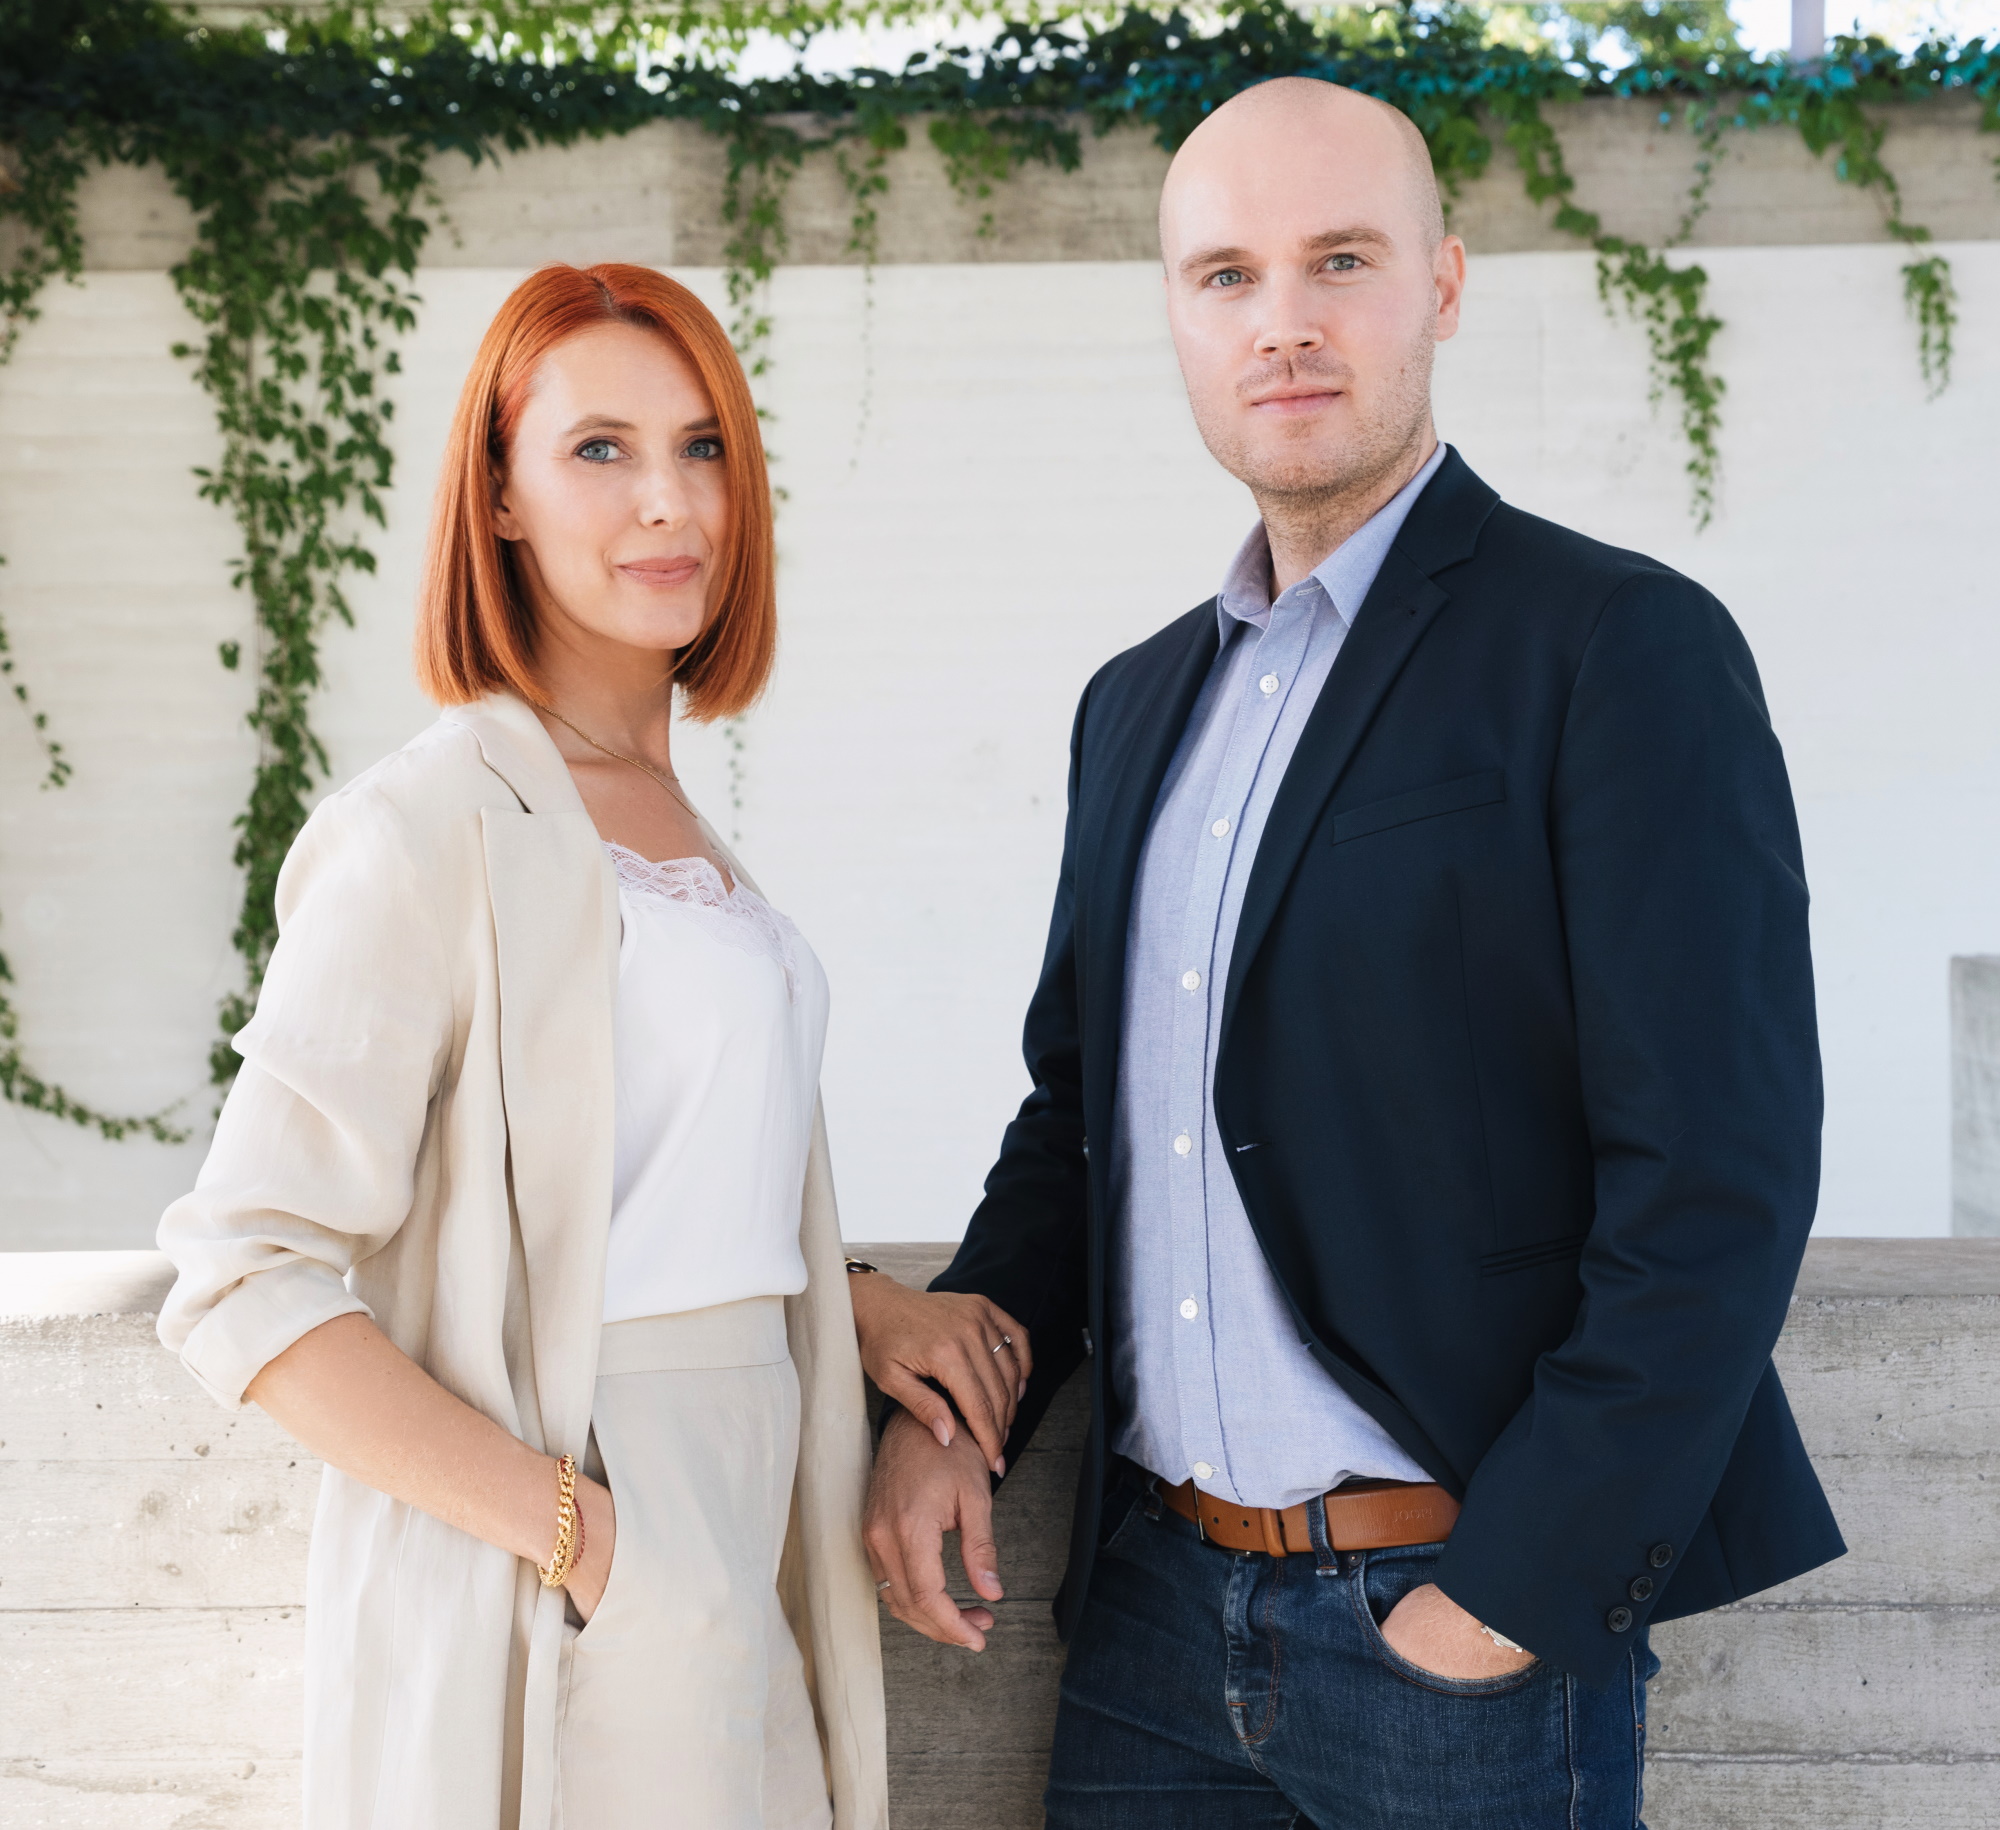 Gründer der PKV Welt Sandra und Tim Bökemeier